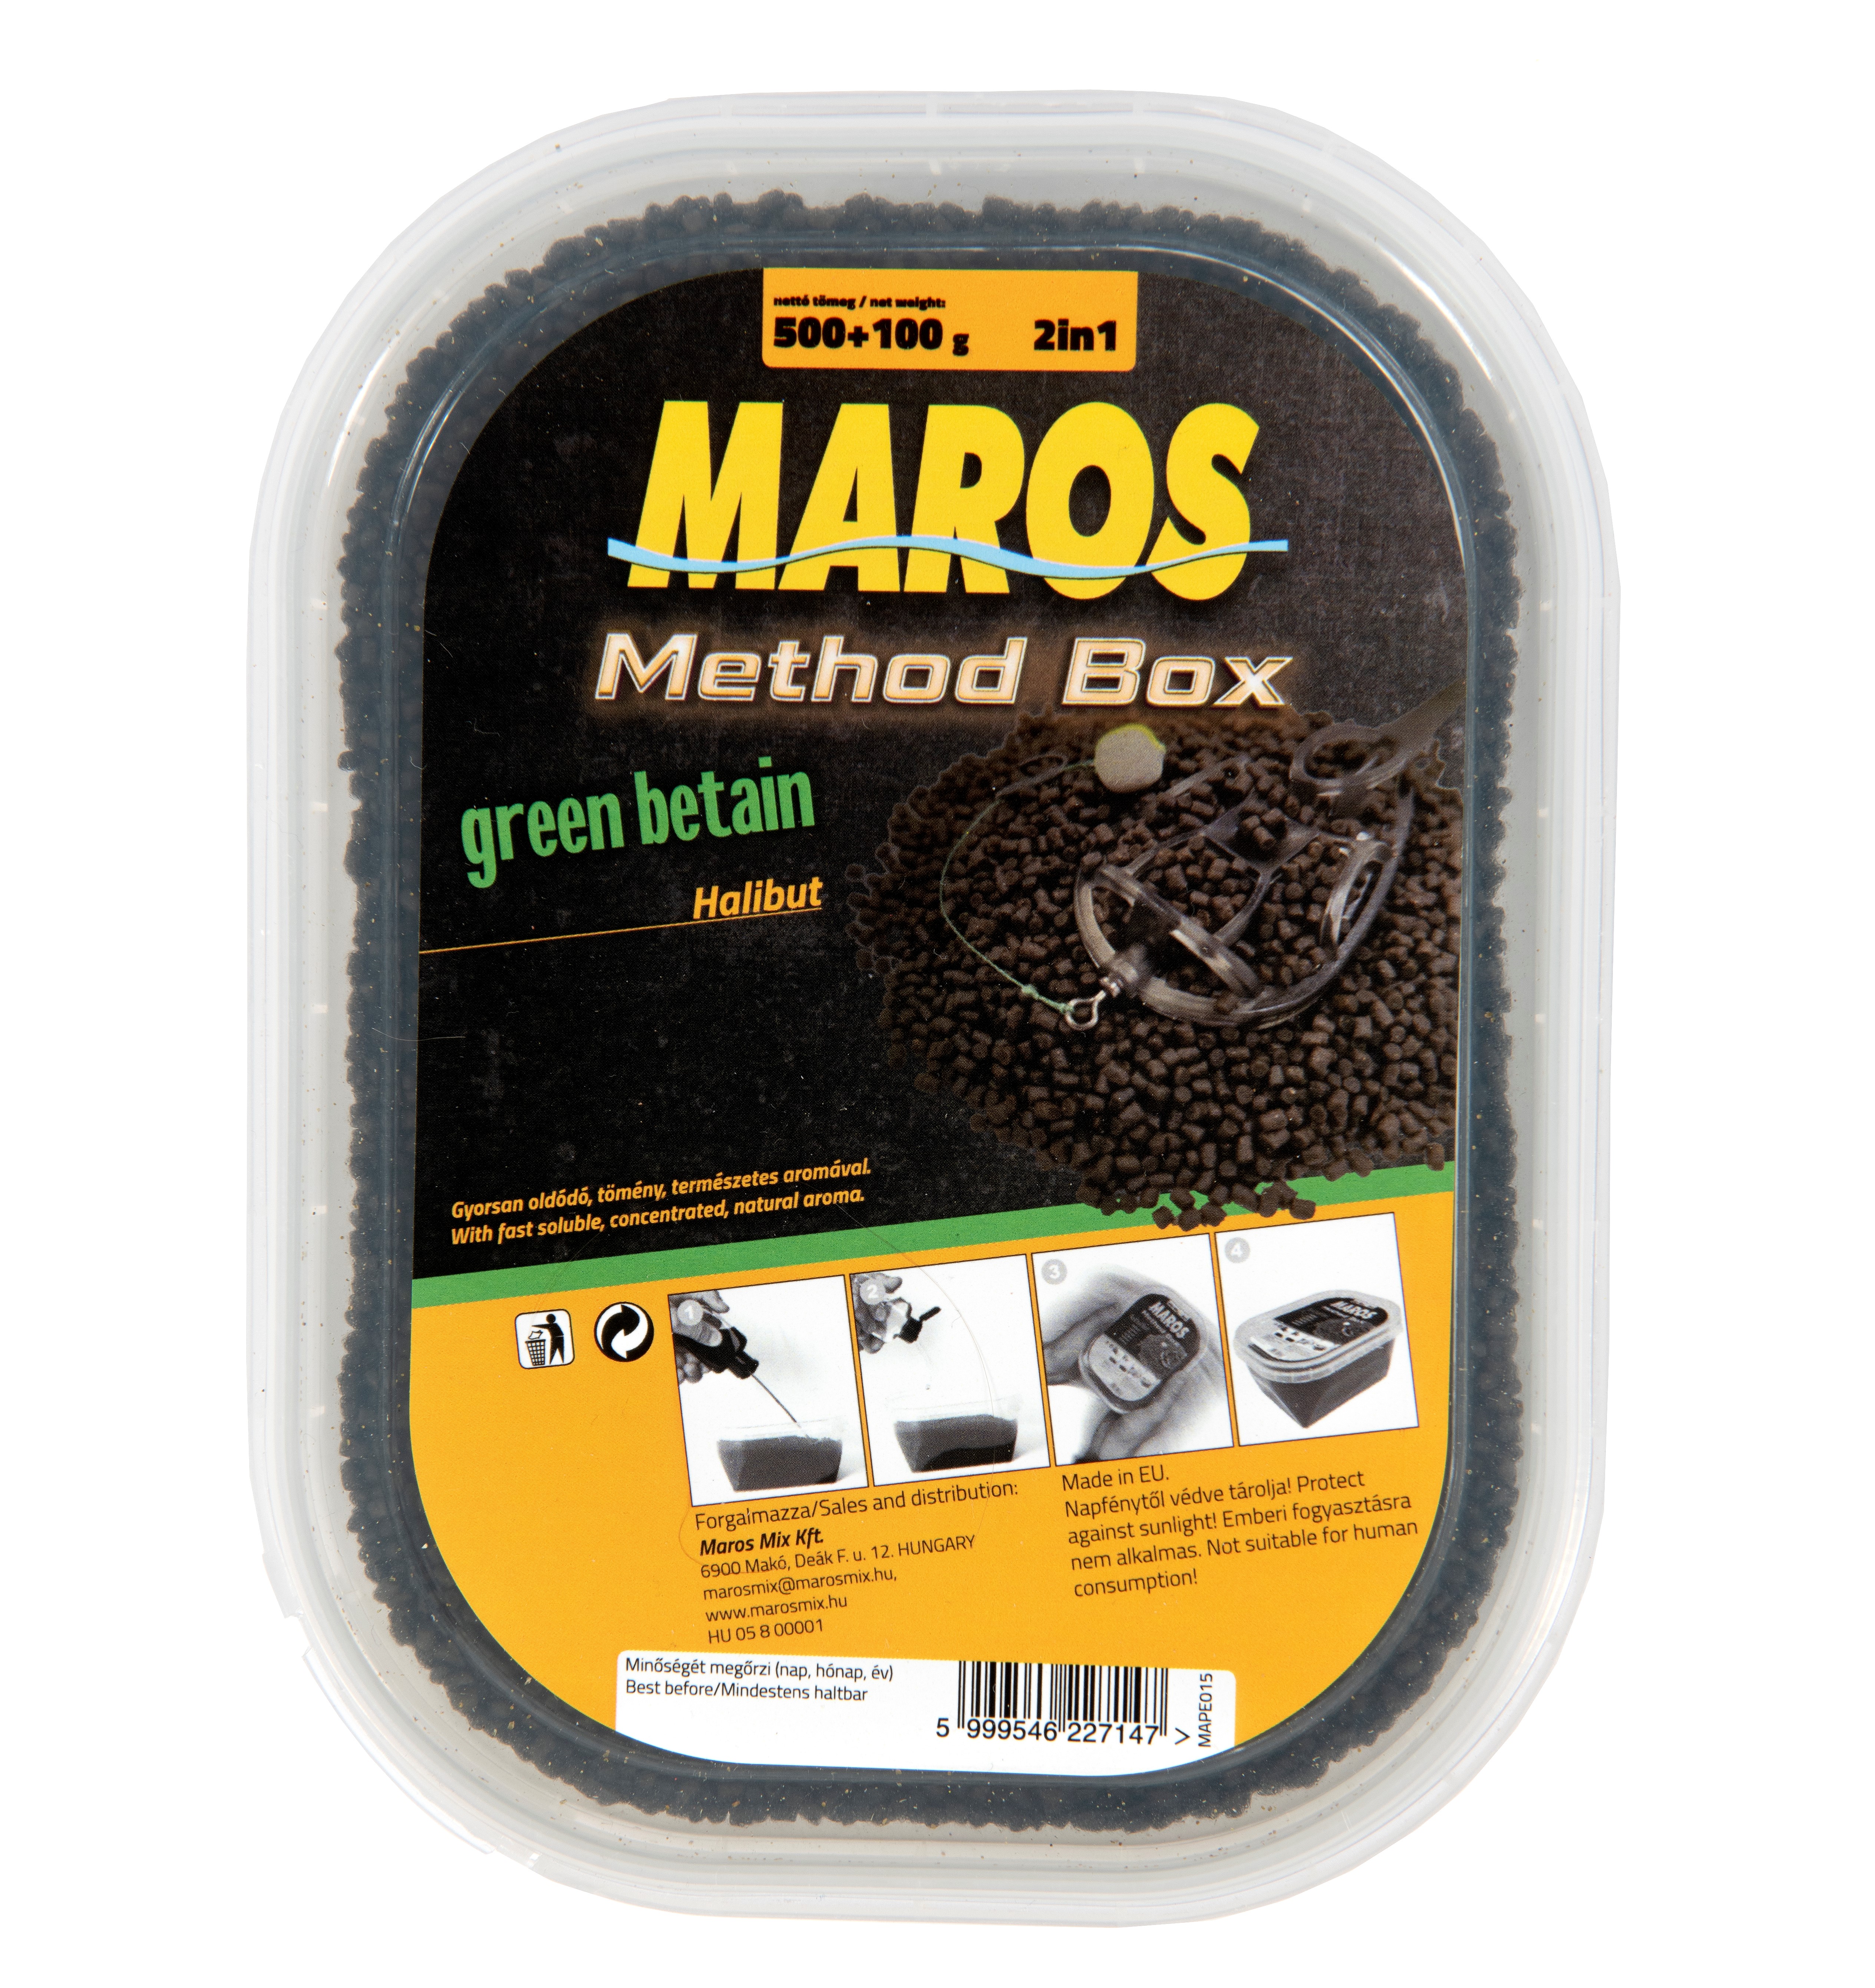 Method Box